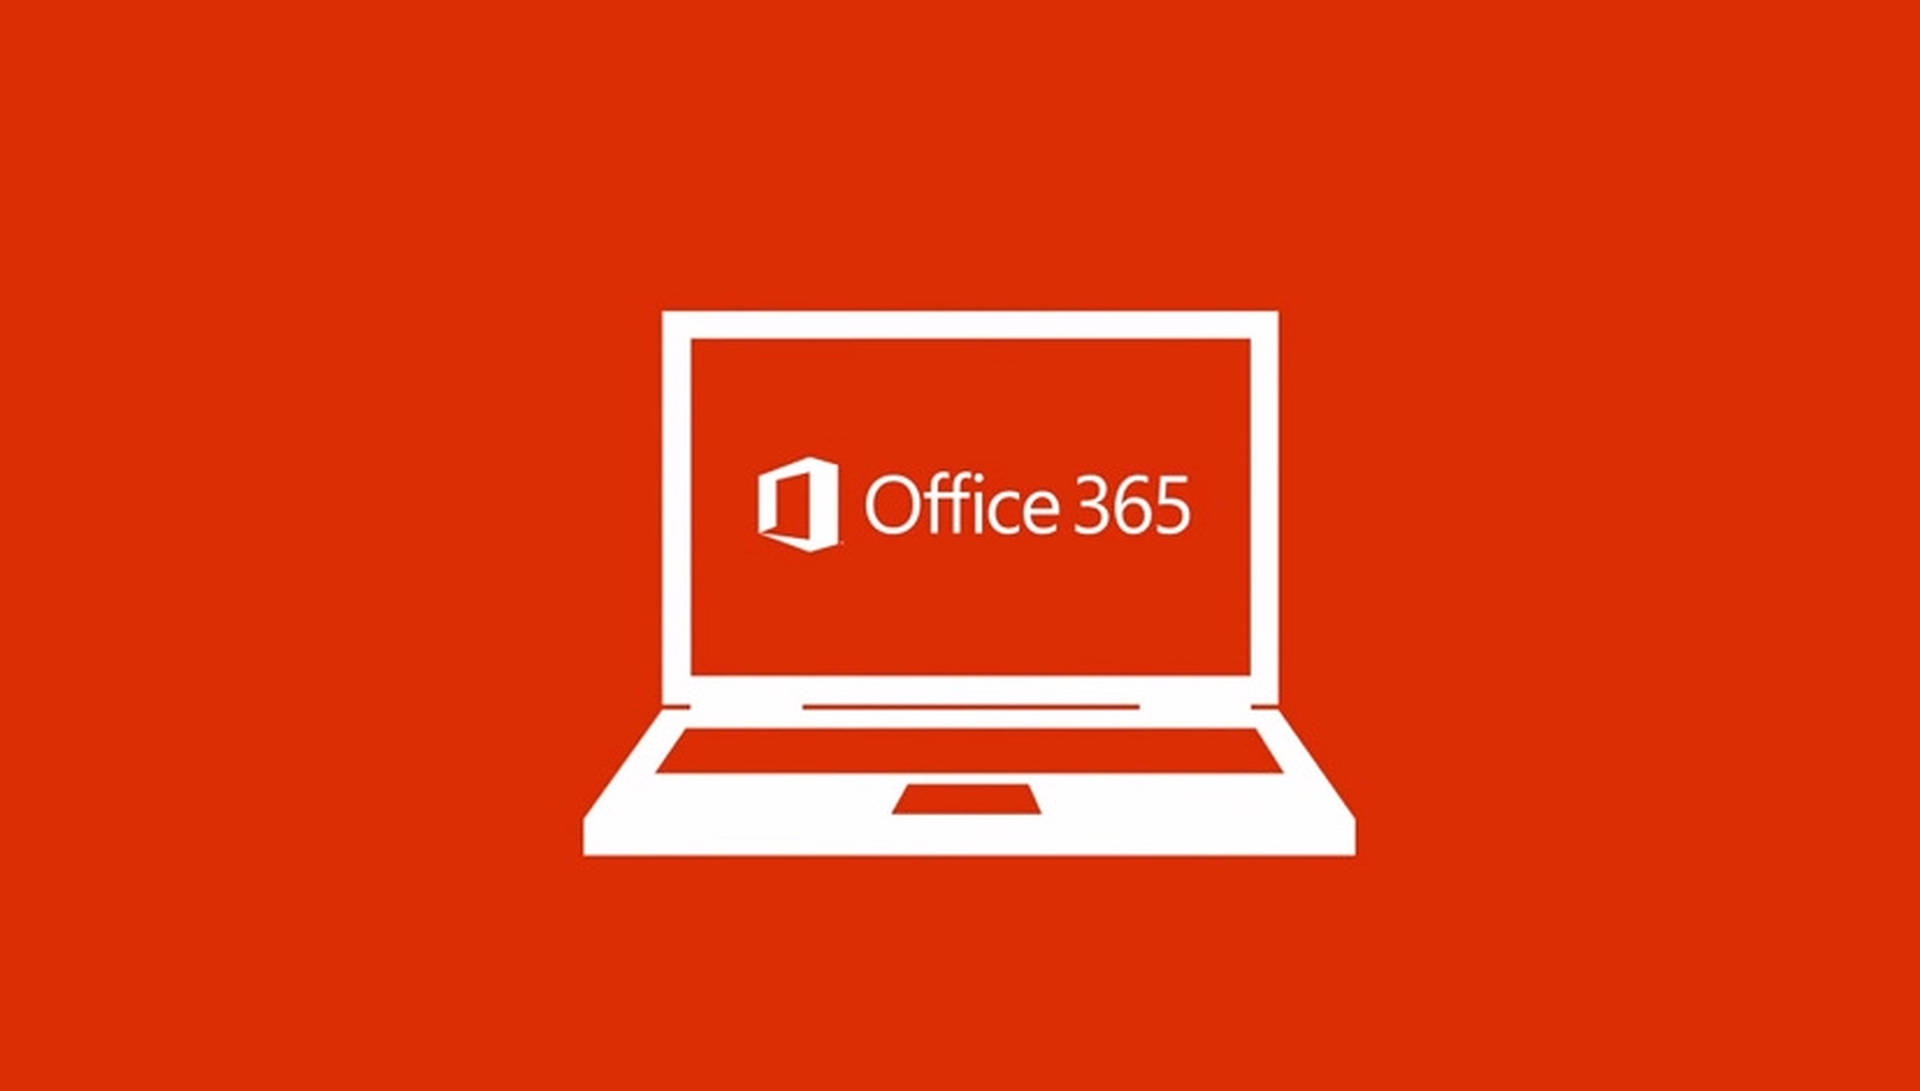 Office 365 Wallpaper